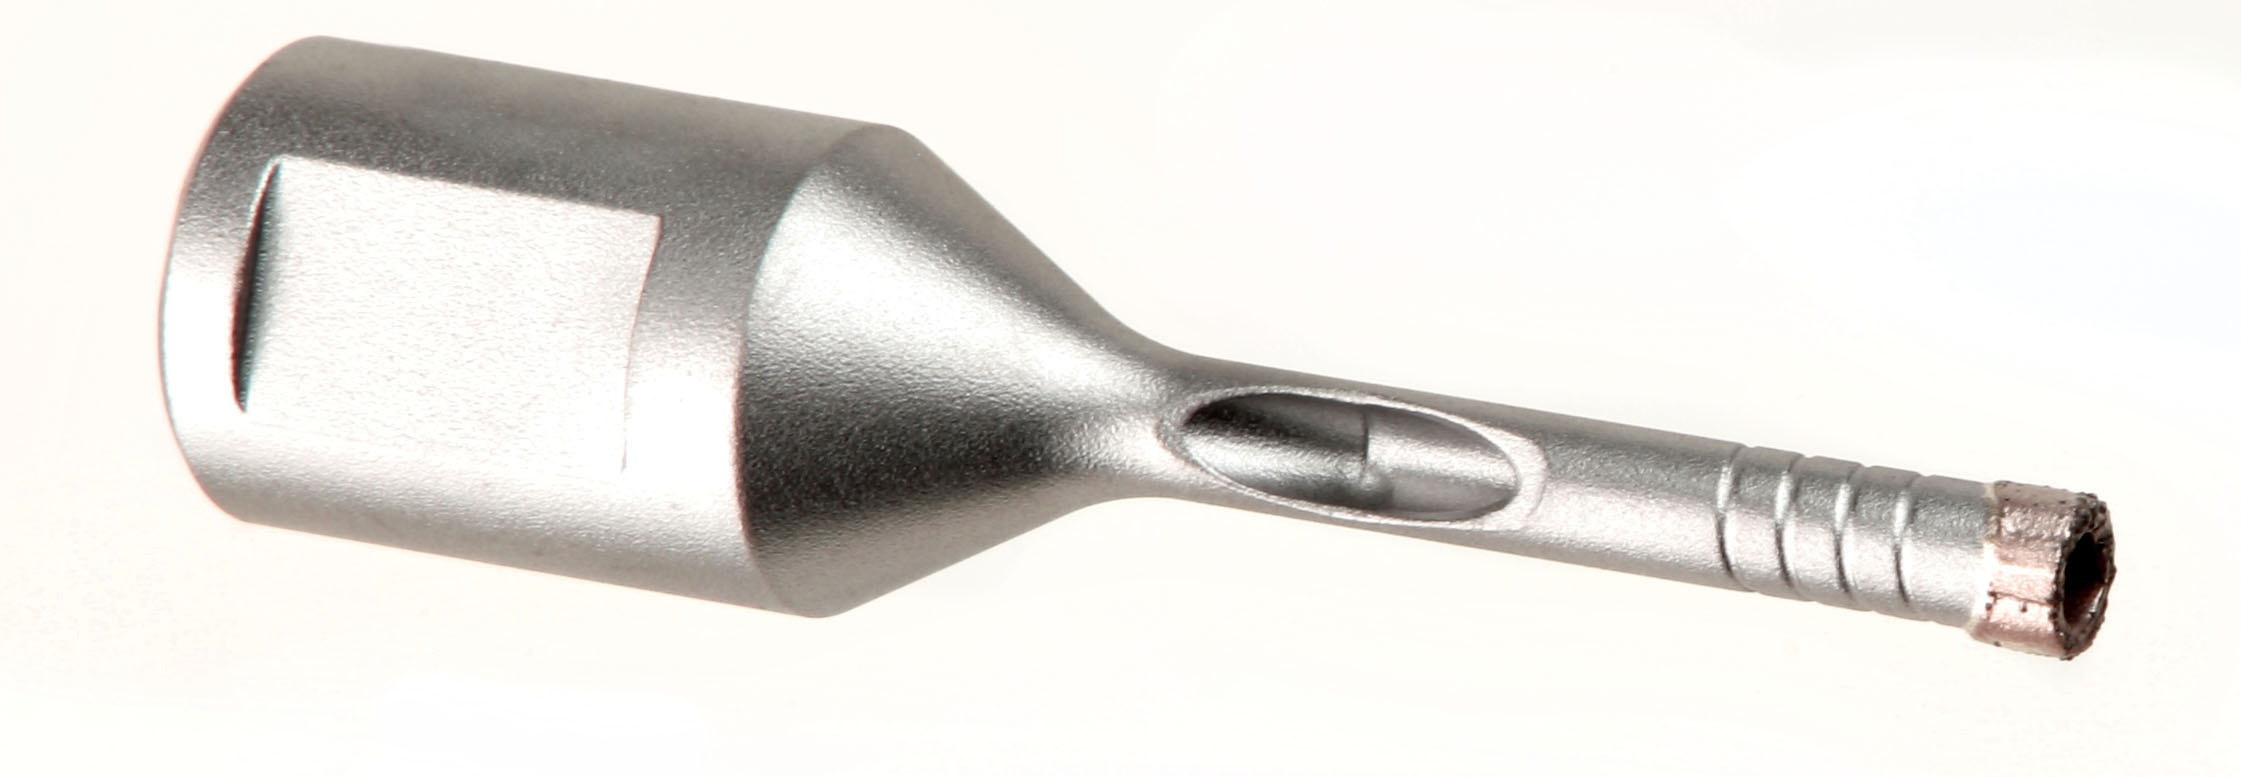 Perçage Grey Ceram Foret diamant avec attachement M14 - 423.jpg